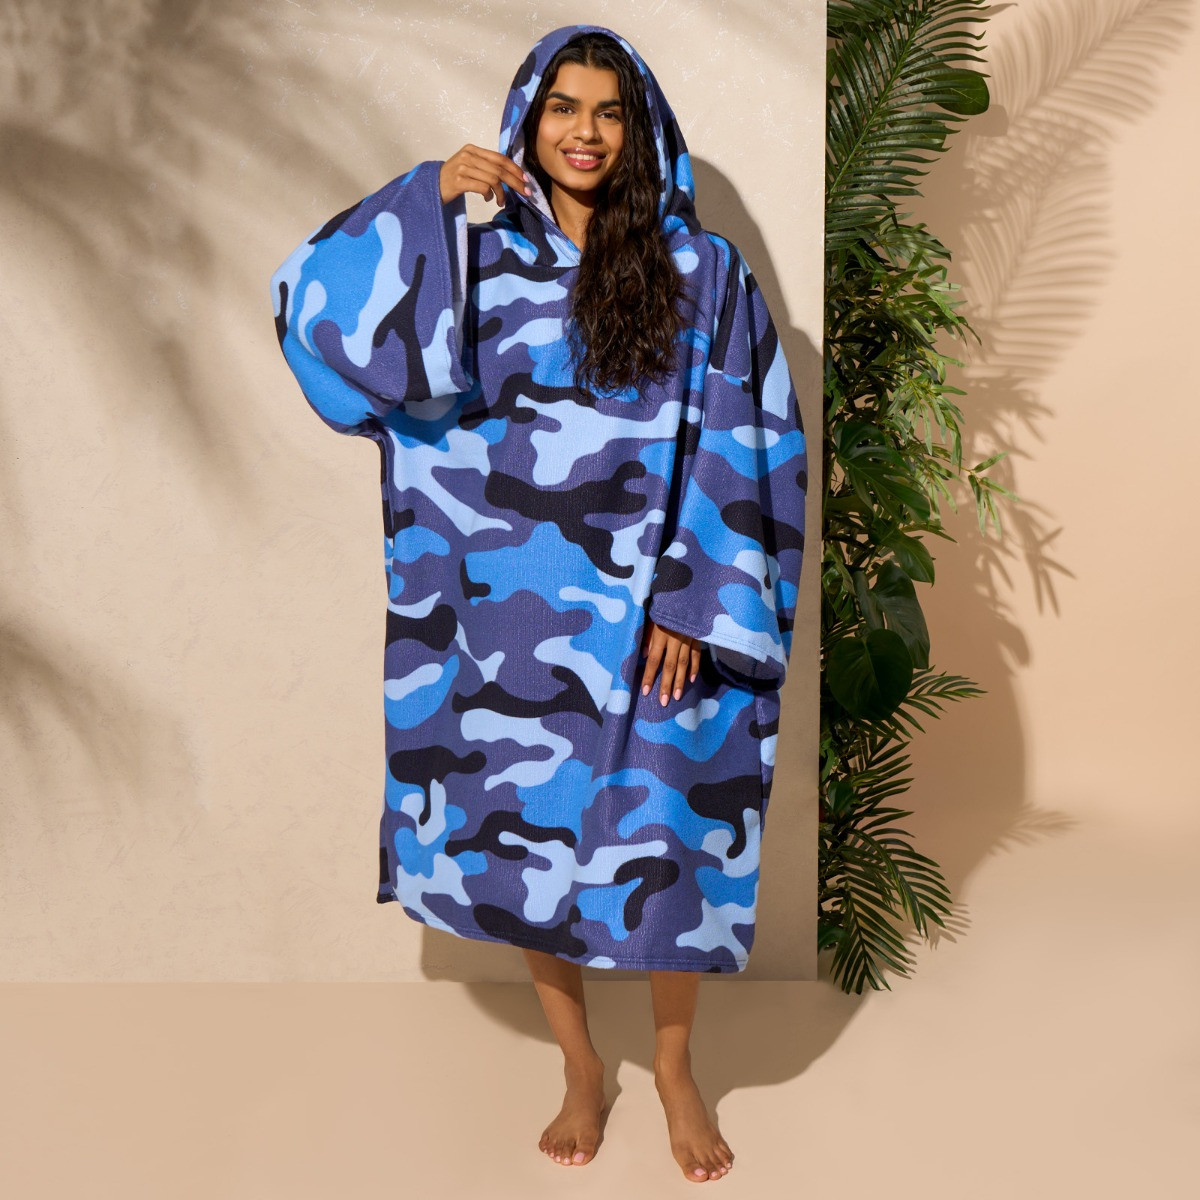 OHS Adult Towel Poncho Camo Print - Navy Blue>